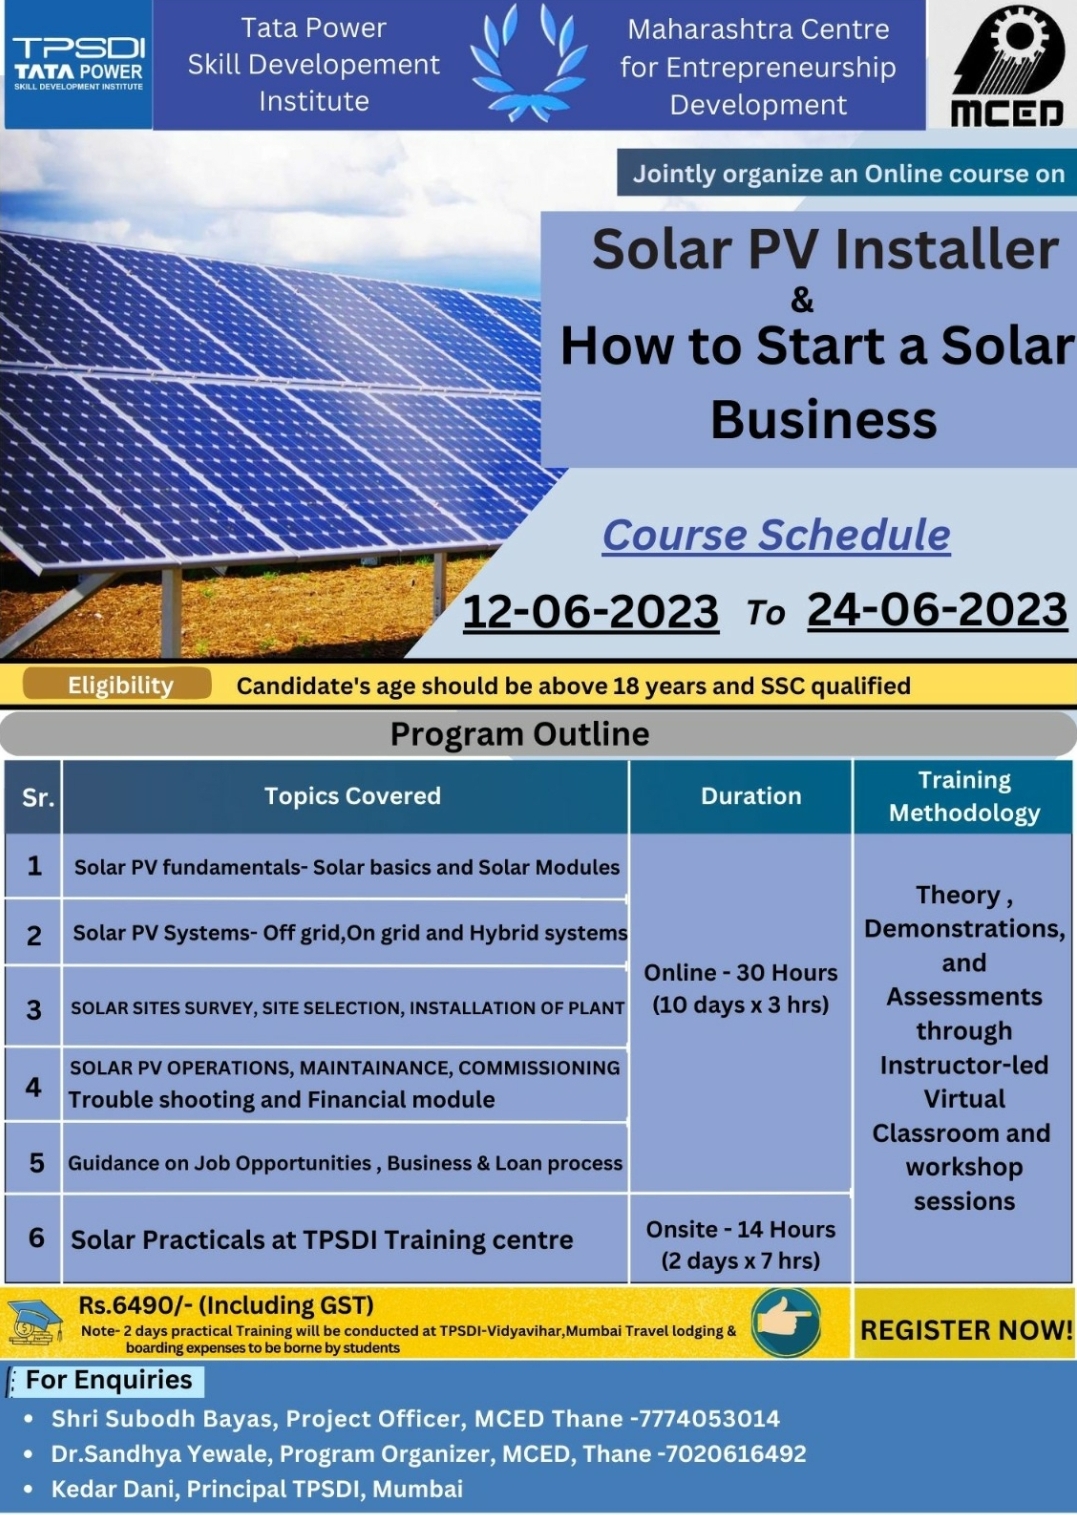 SOLAR PV INSTALLER & HOW TO START 
A SOLAR BUSINESS